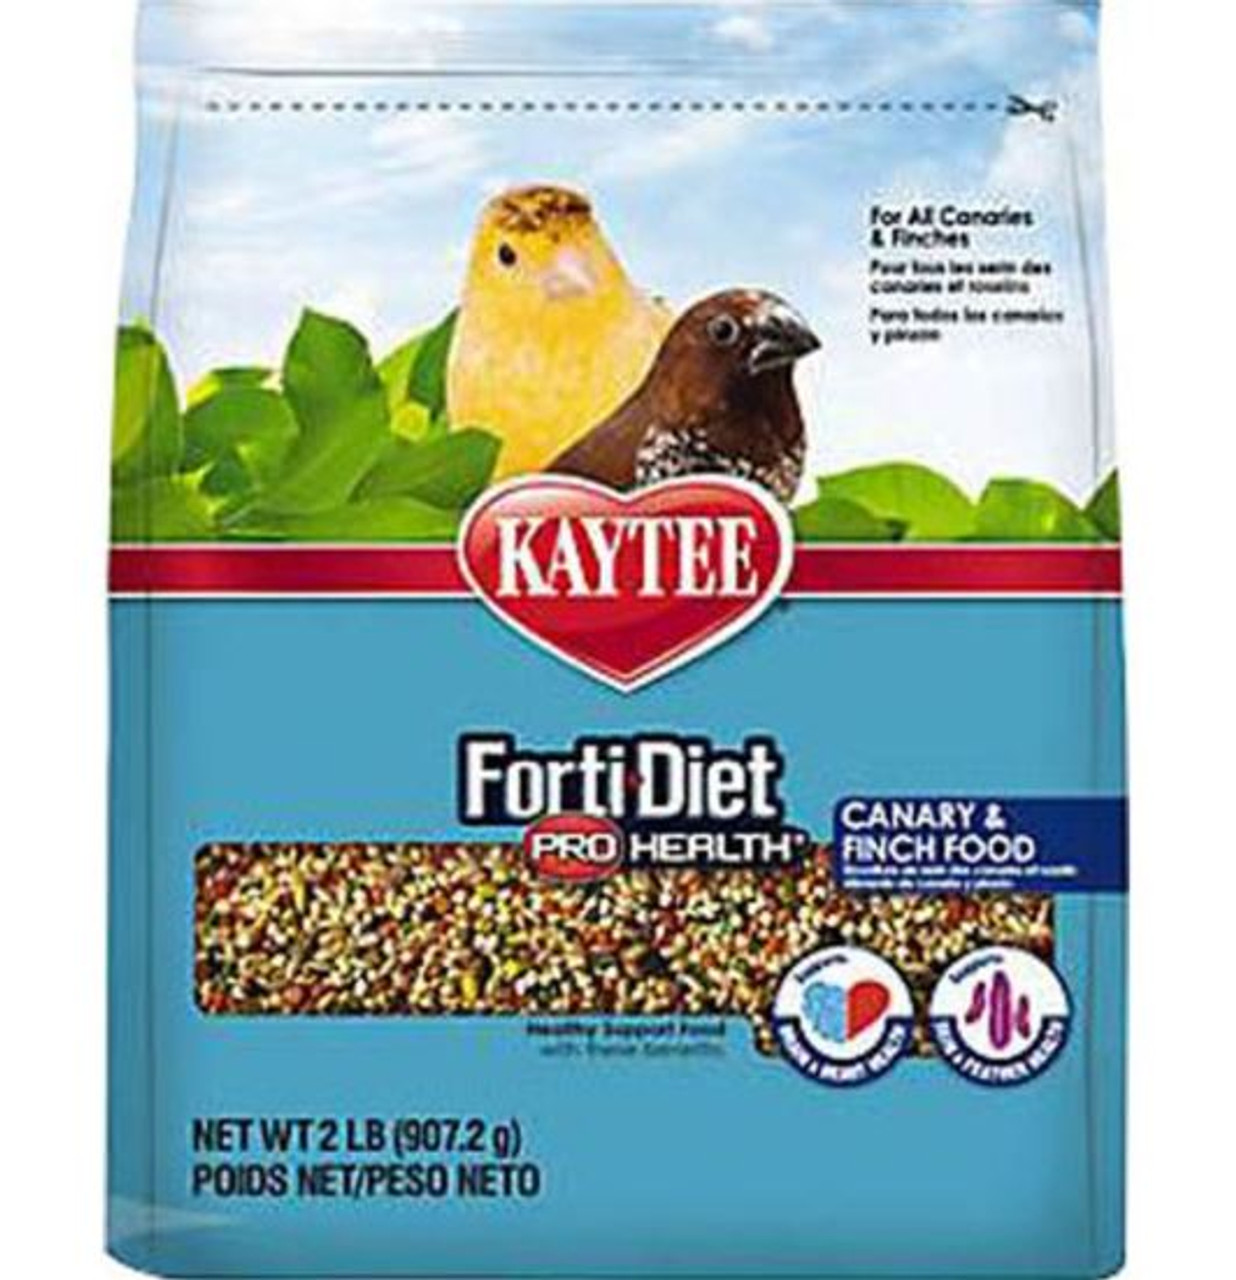 Kaytee Wild Finch Wild Bird Food, 3 lbs.